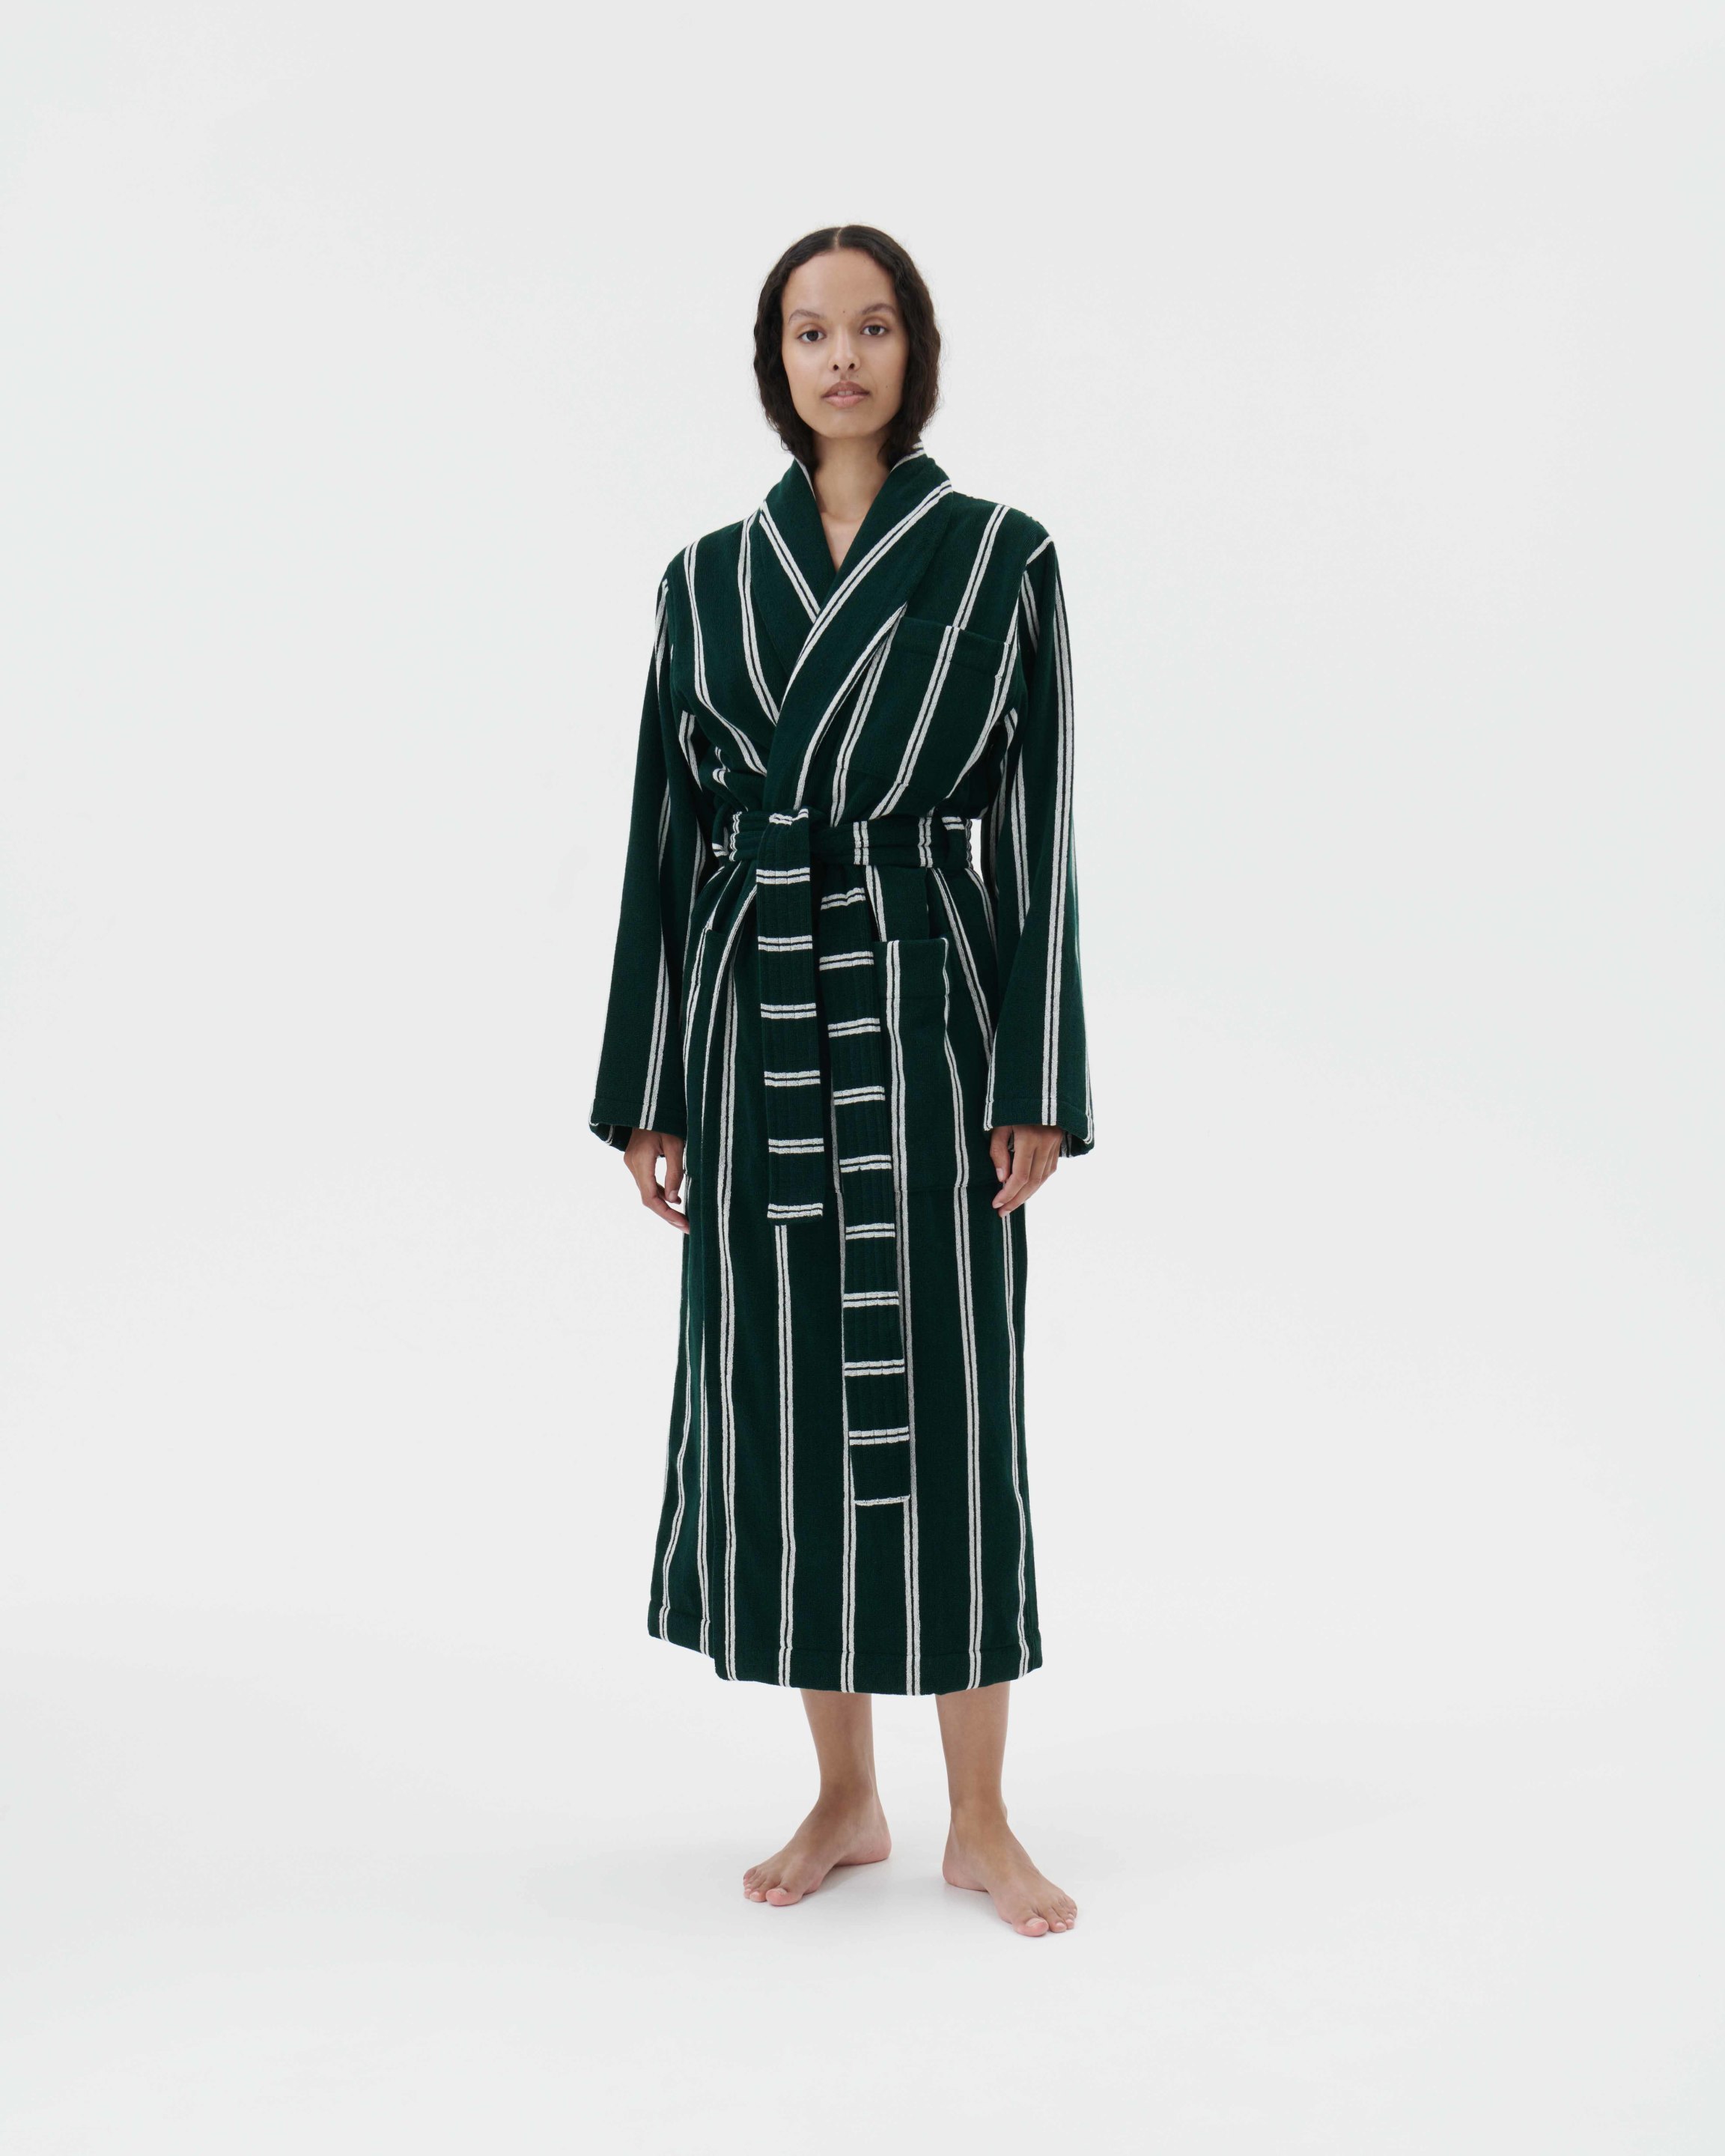 Female Forest Green Stripes classic bathrobe